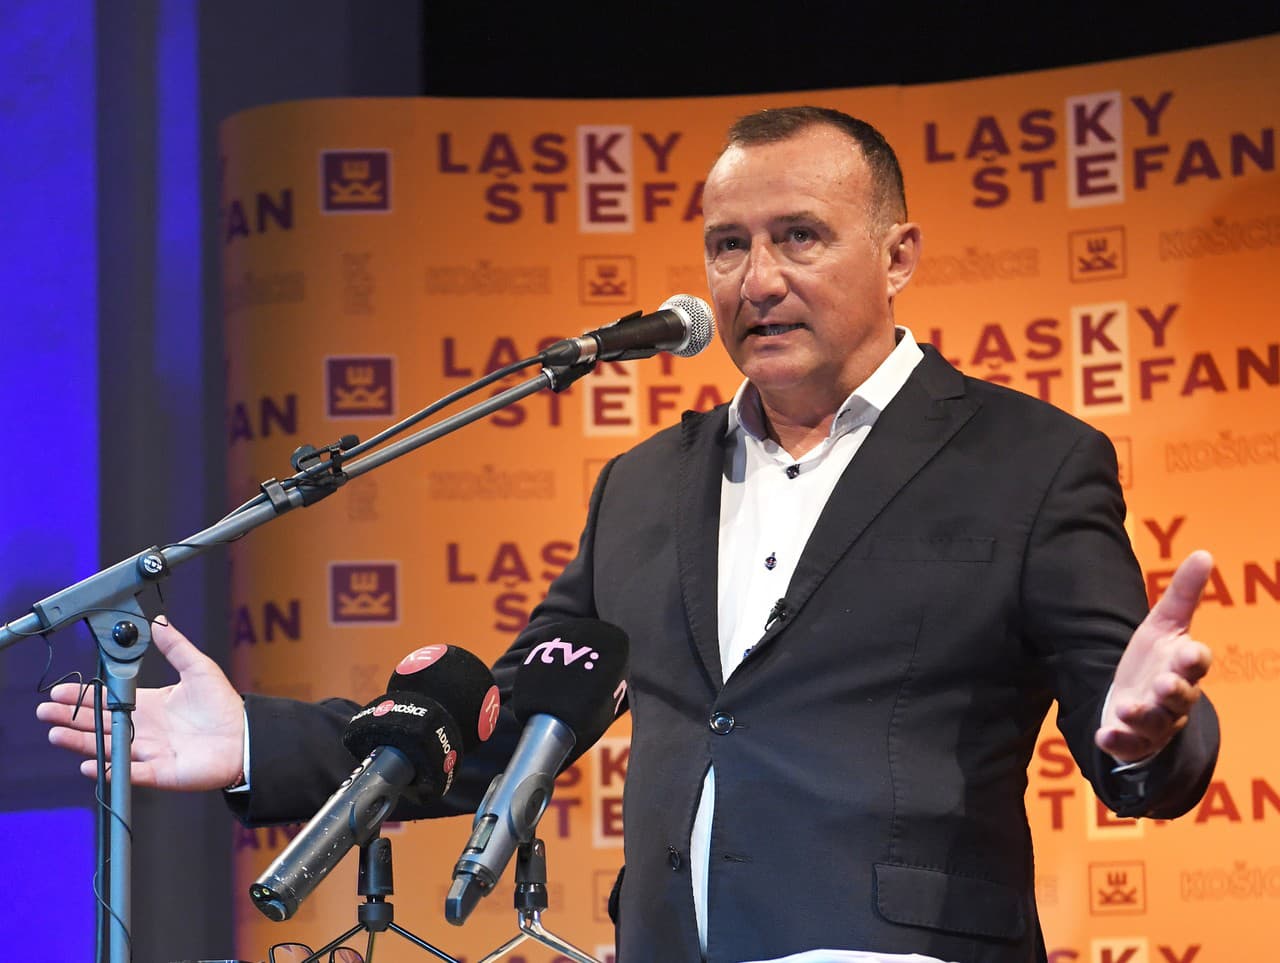 Kandidát na primátora mesta Košice Štefan Lasky